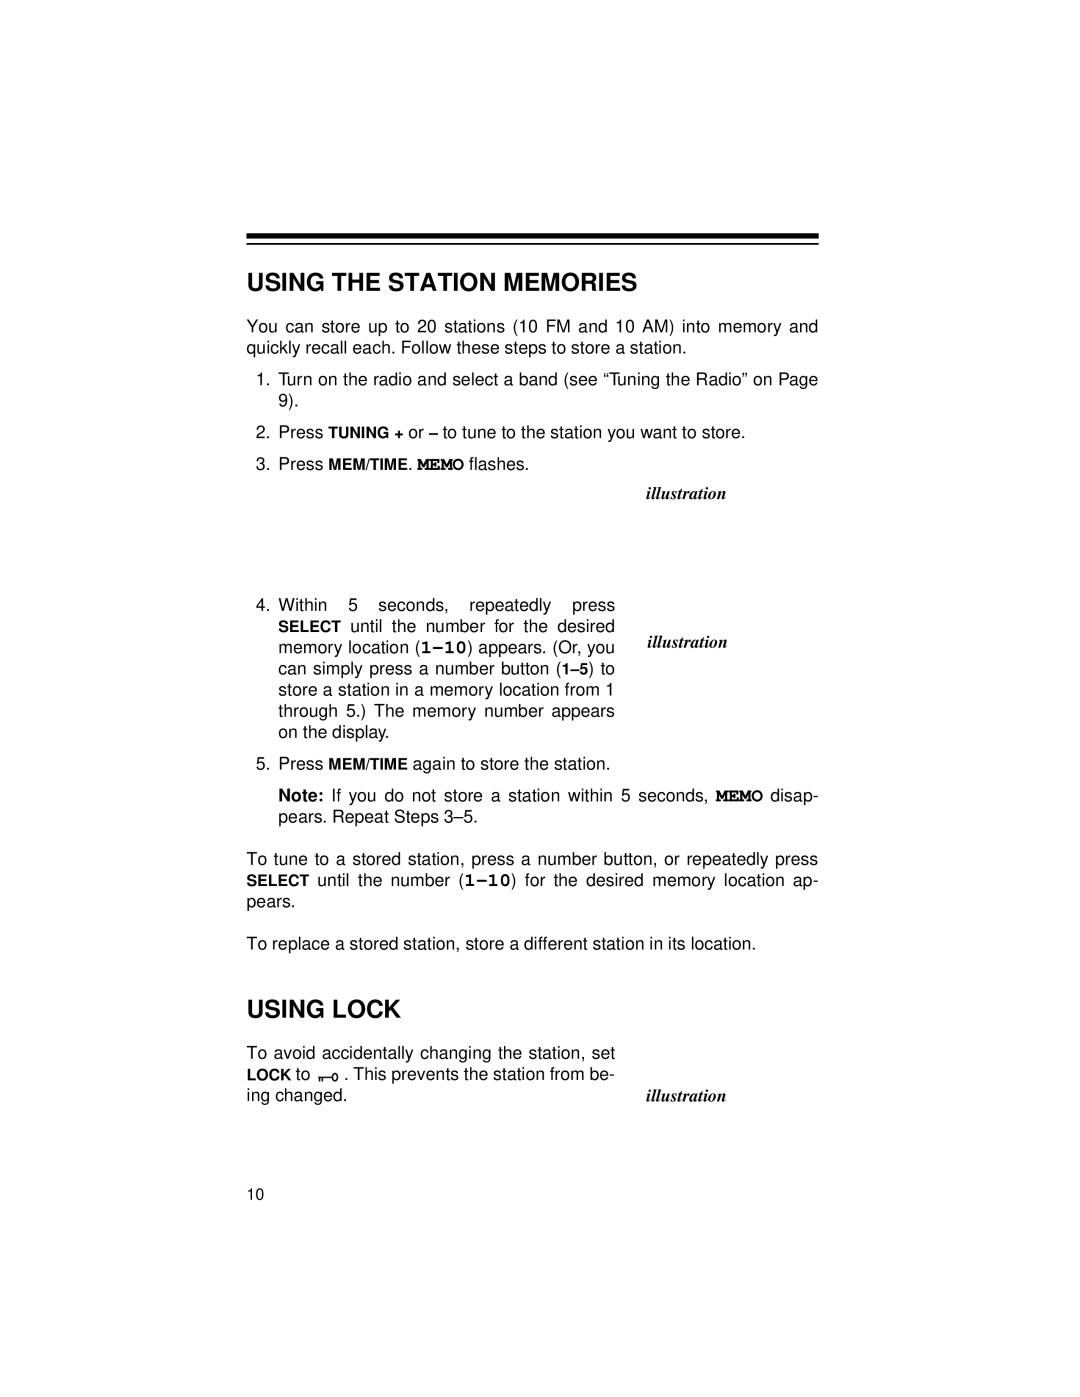 Radio Shack Radio owner manual Using The Station Memories, Using Lock, illustration 